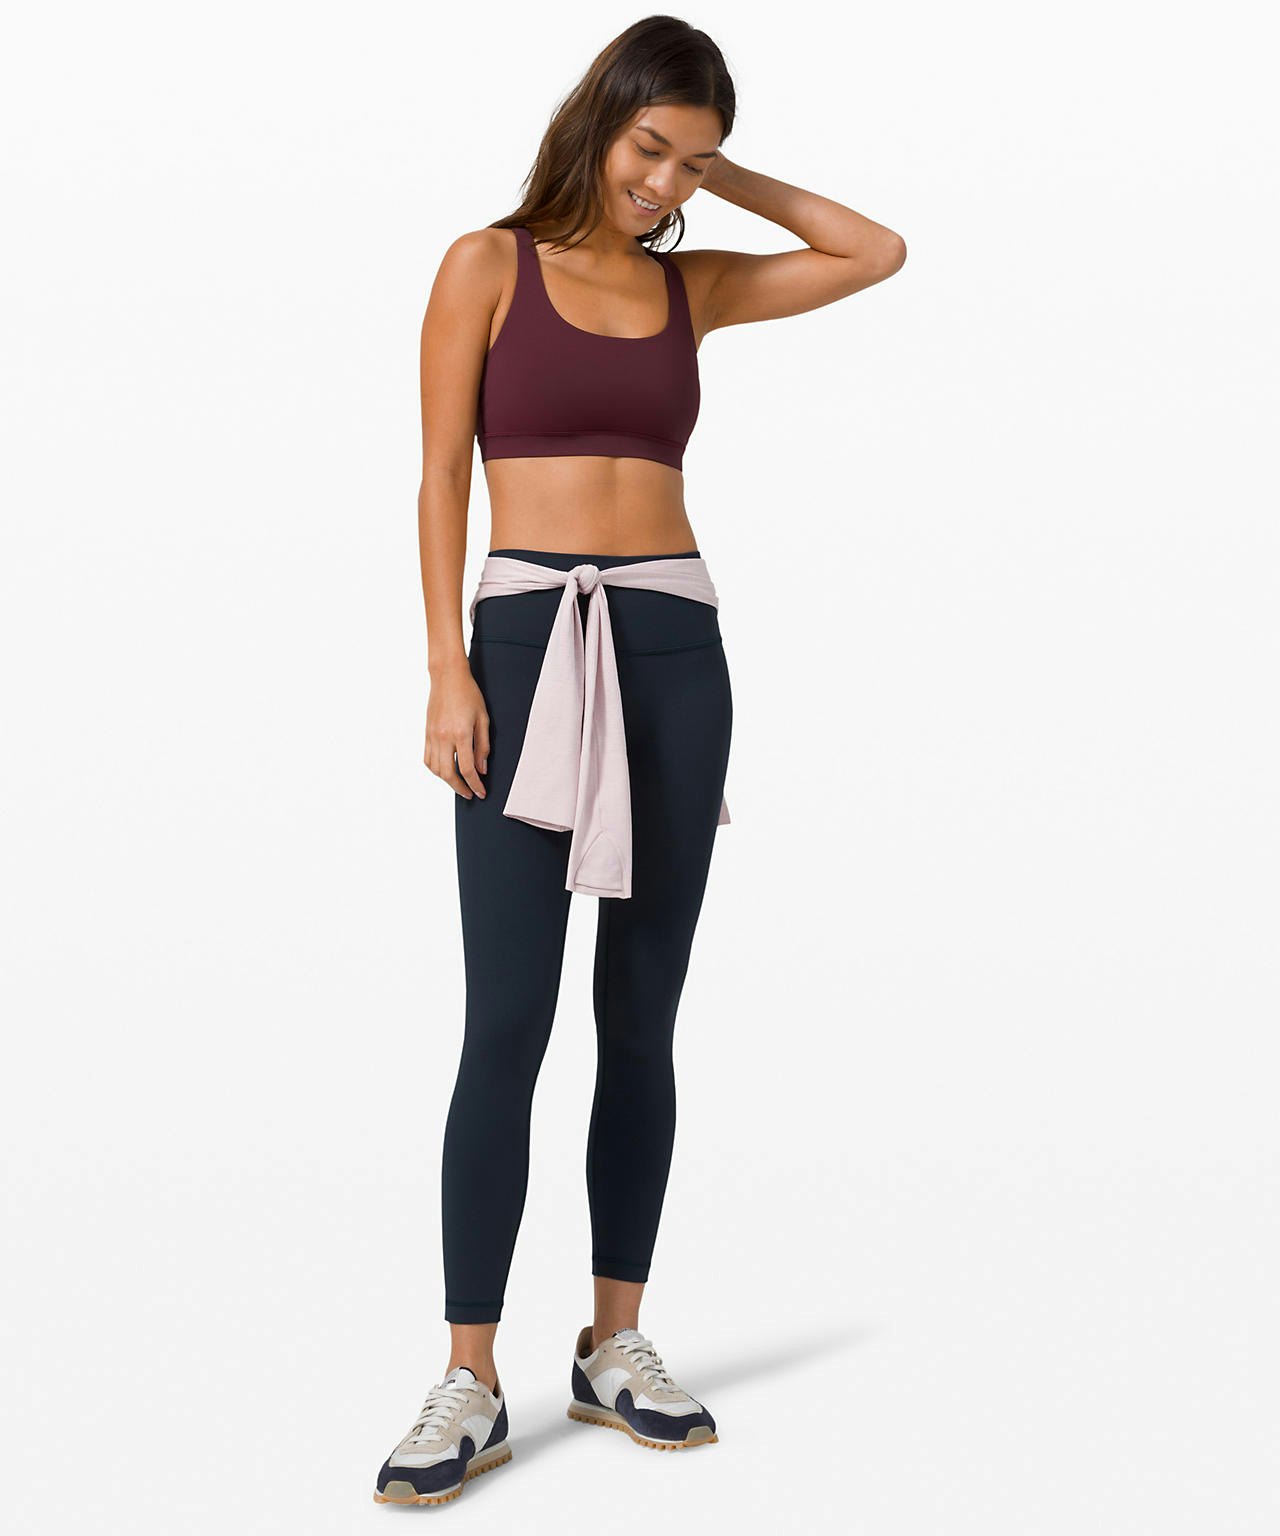 Lulu Original Yoga Wear Ribbed Contrast Color Running Sports